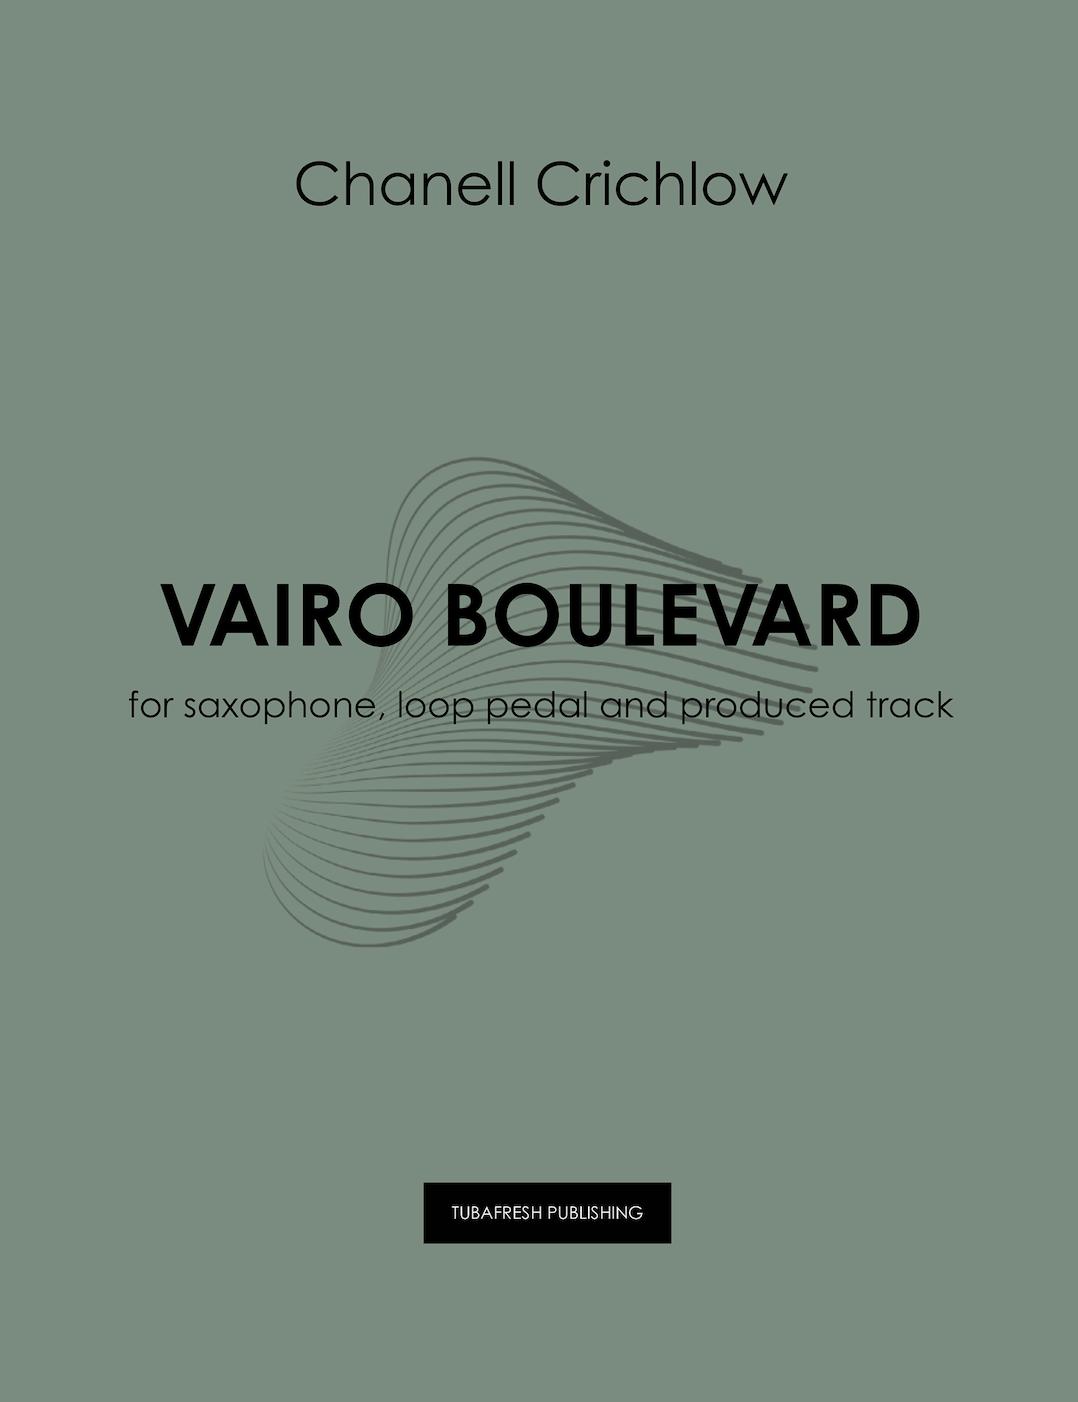 Vairo Boulevard (Tenor Sax Version) by Chanell Crichlow